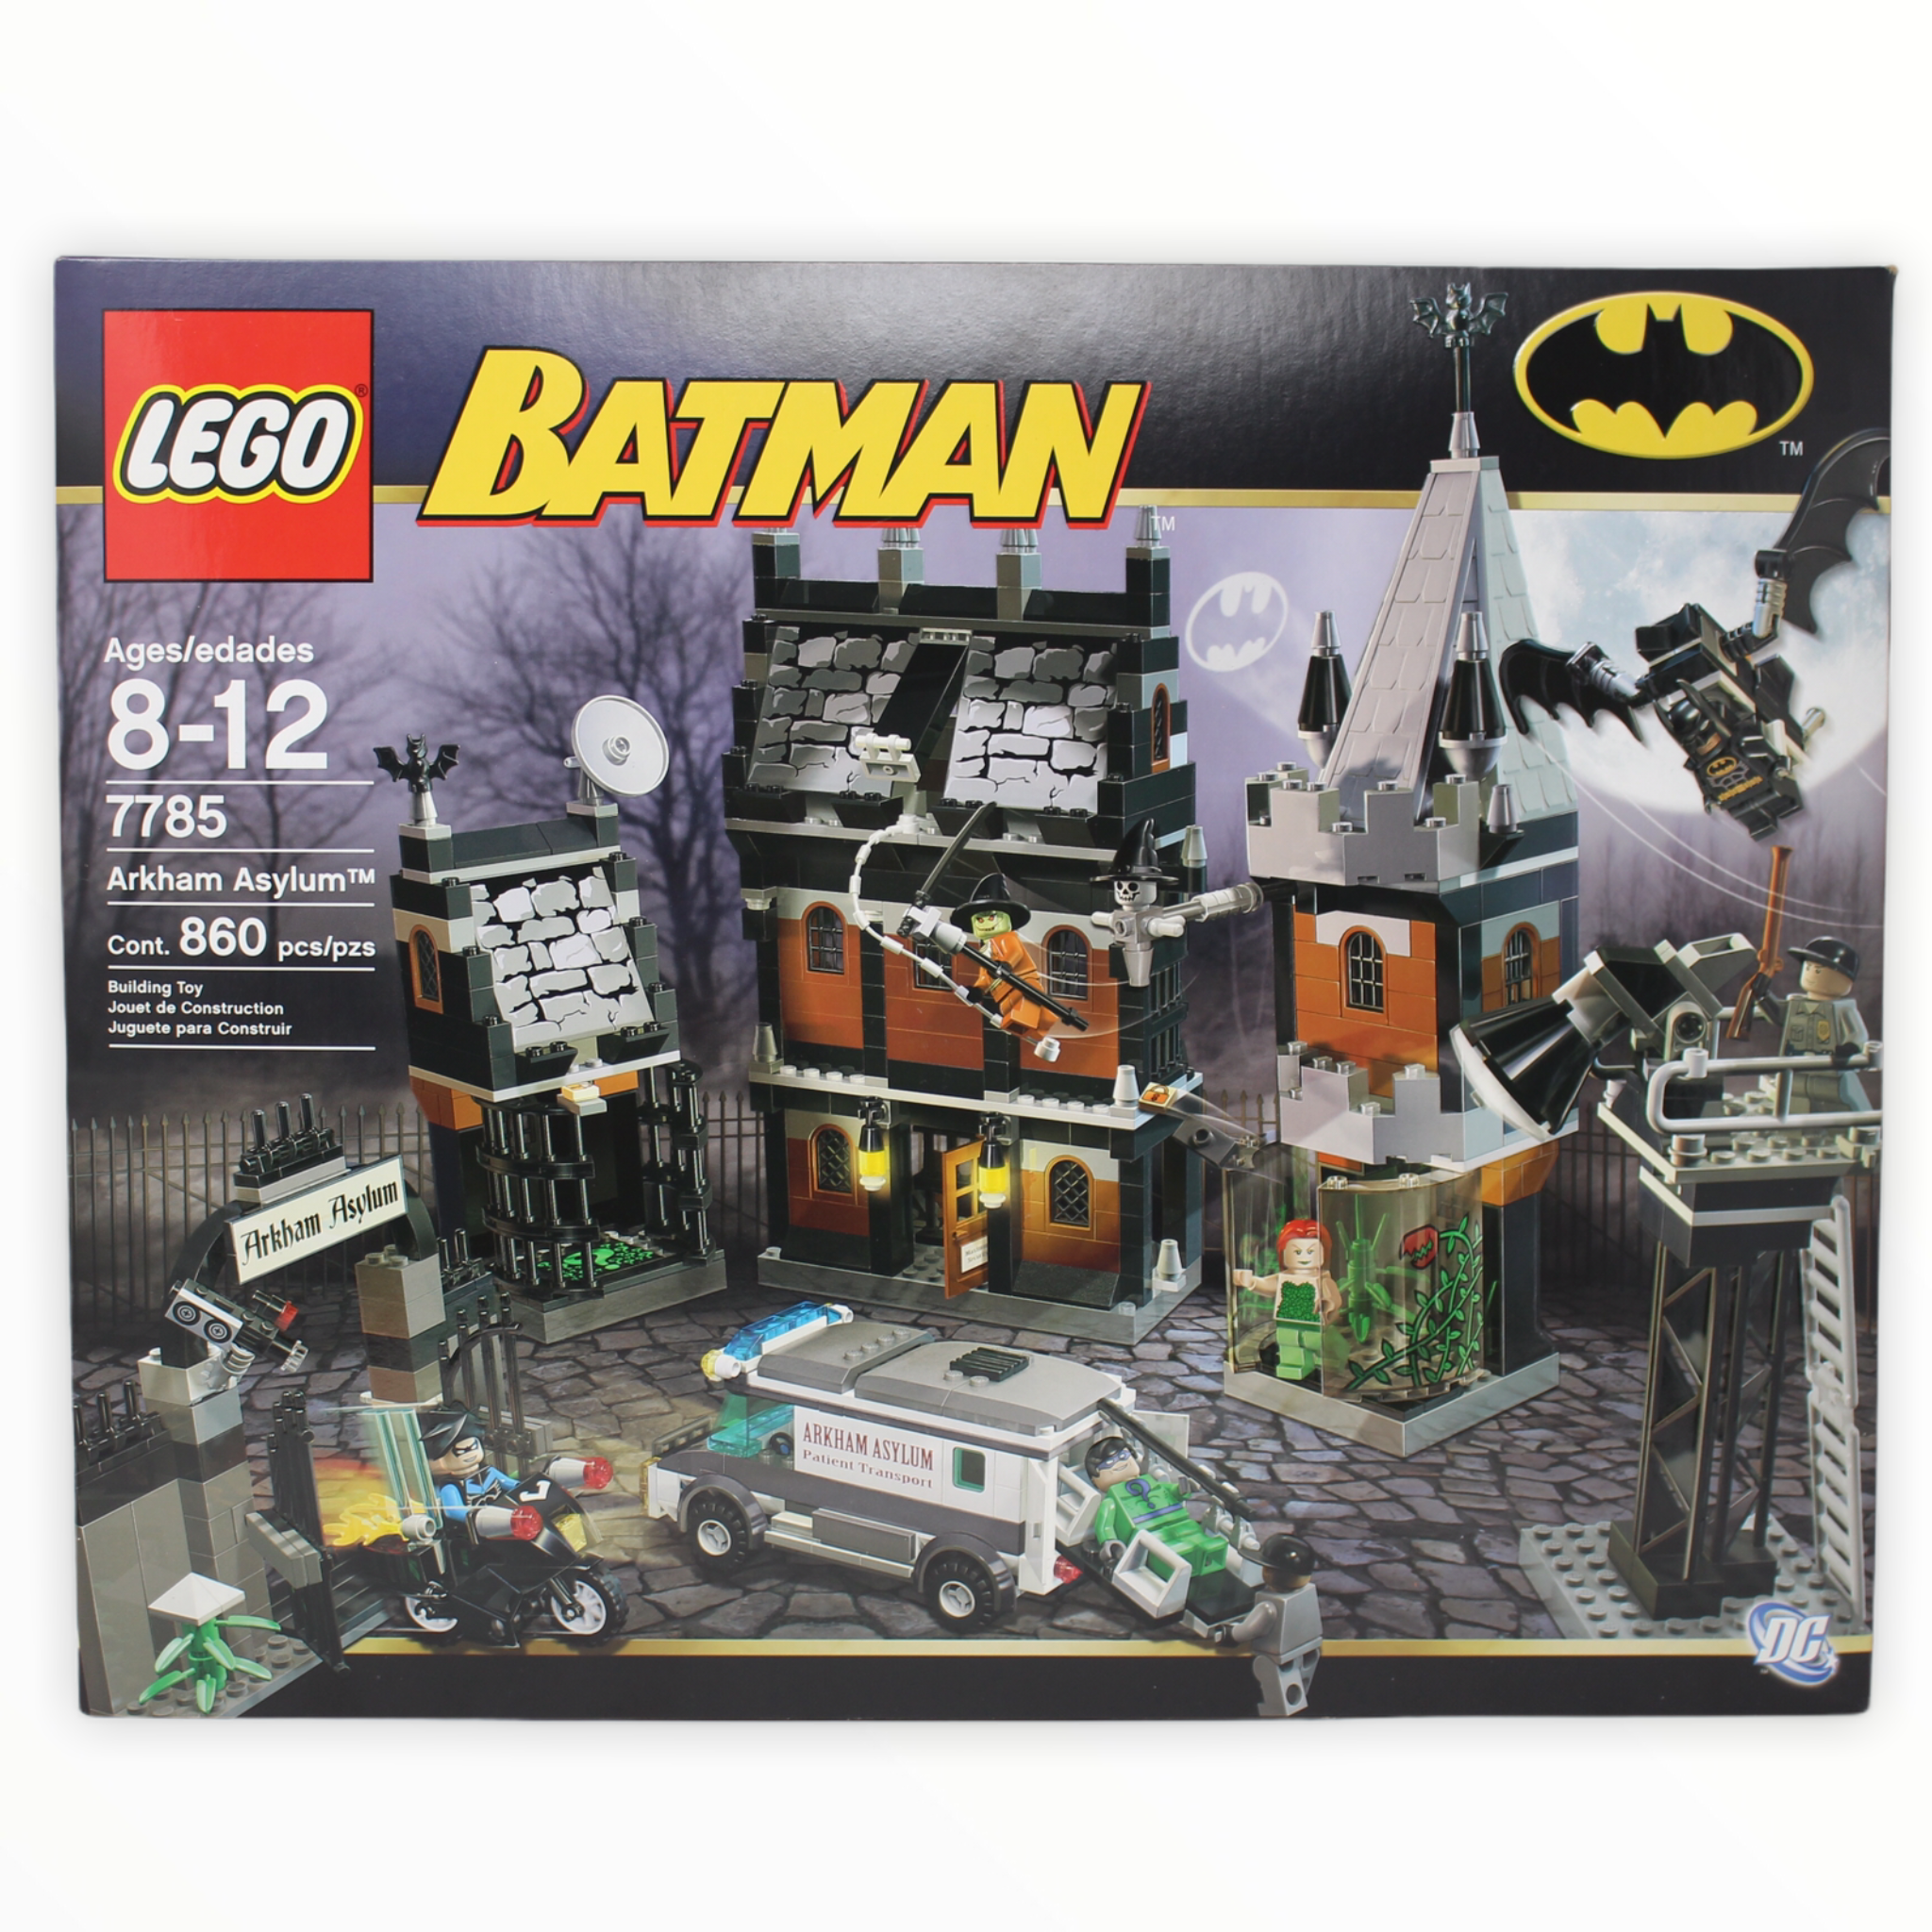 Retired Set 70908 The LEGO Batman Movie The Scuttler